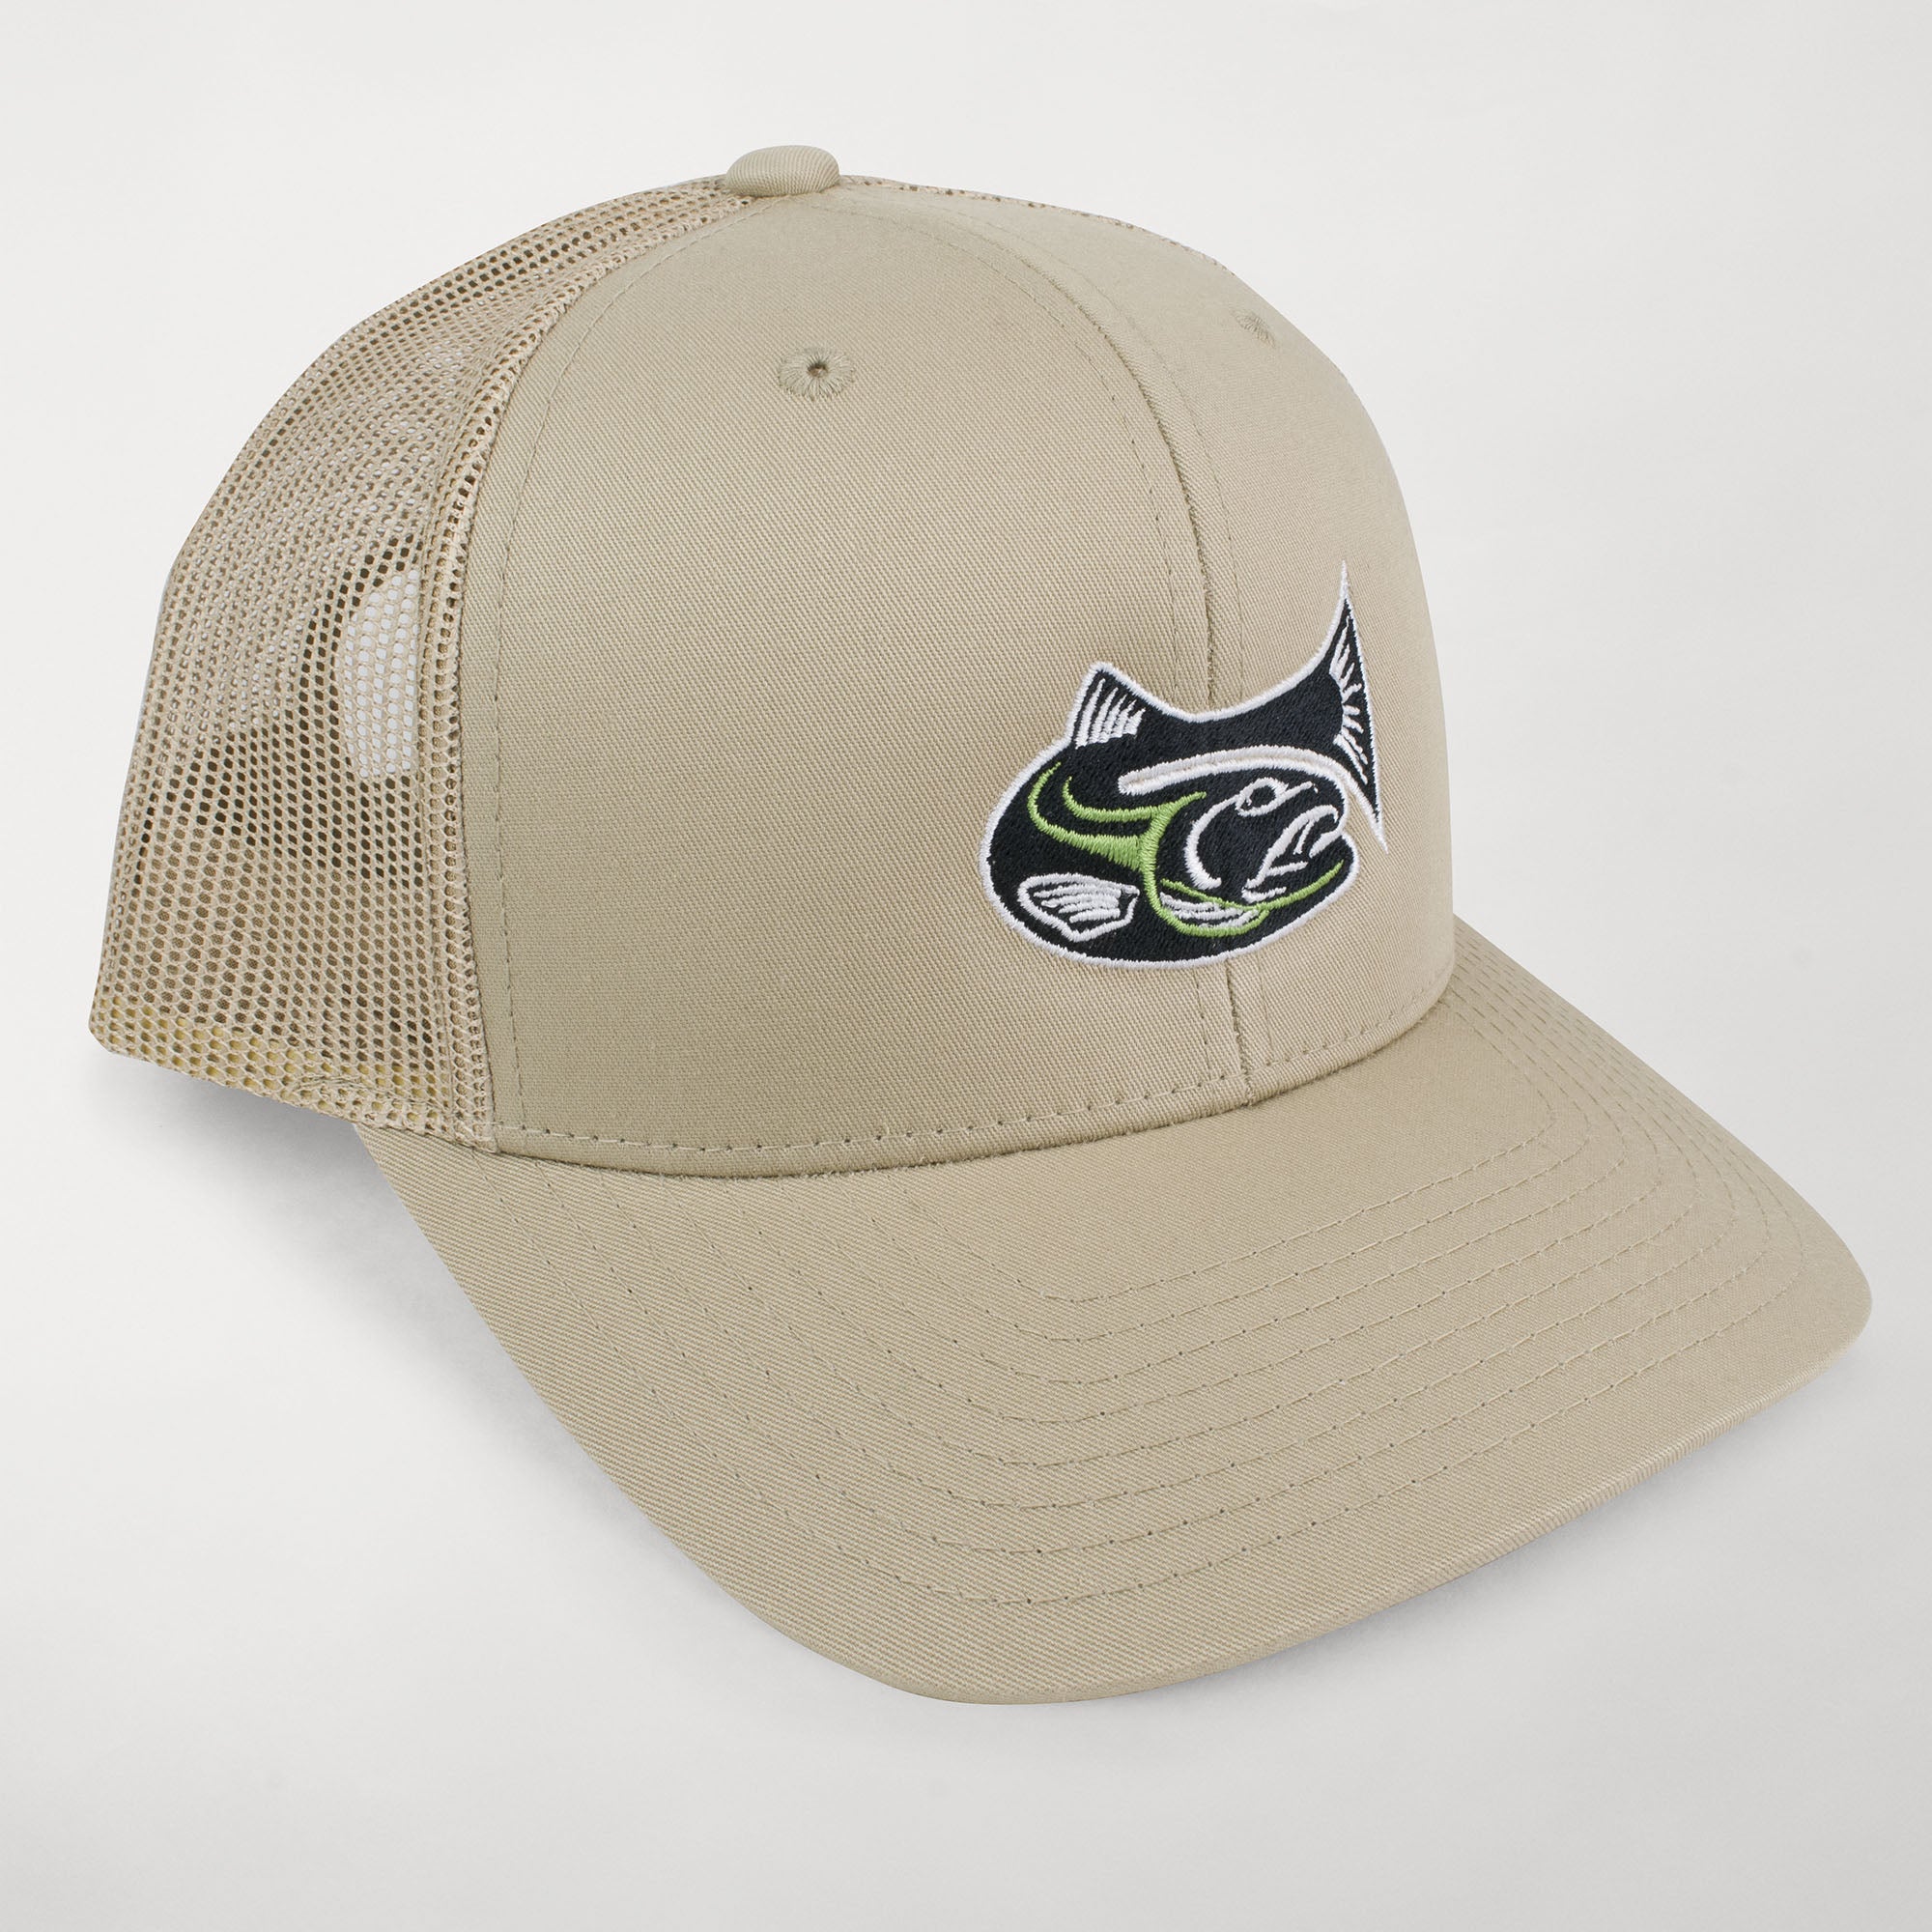 Drifthook Trucker Cap—Khaki with Green Logo - Drifthook